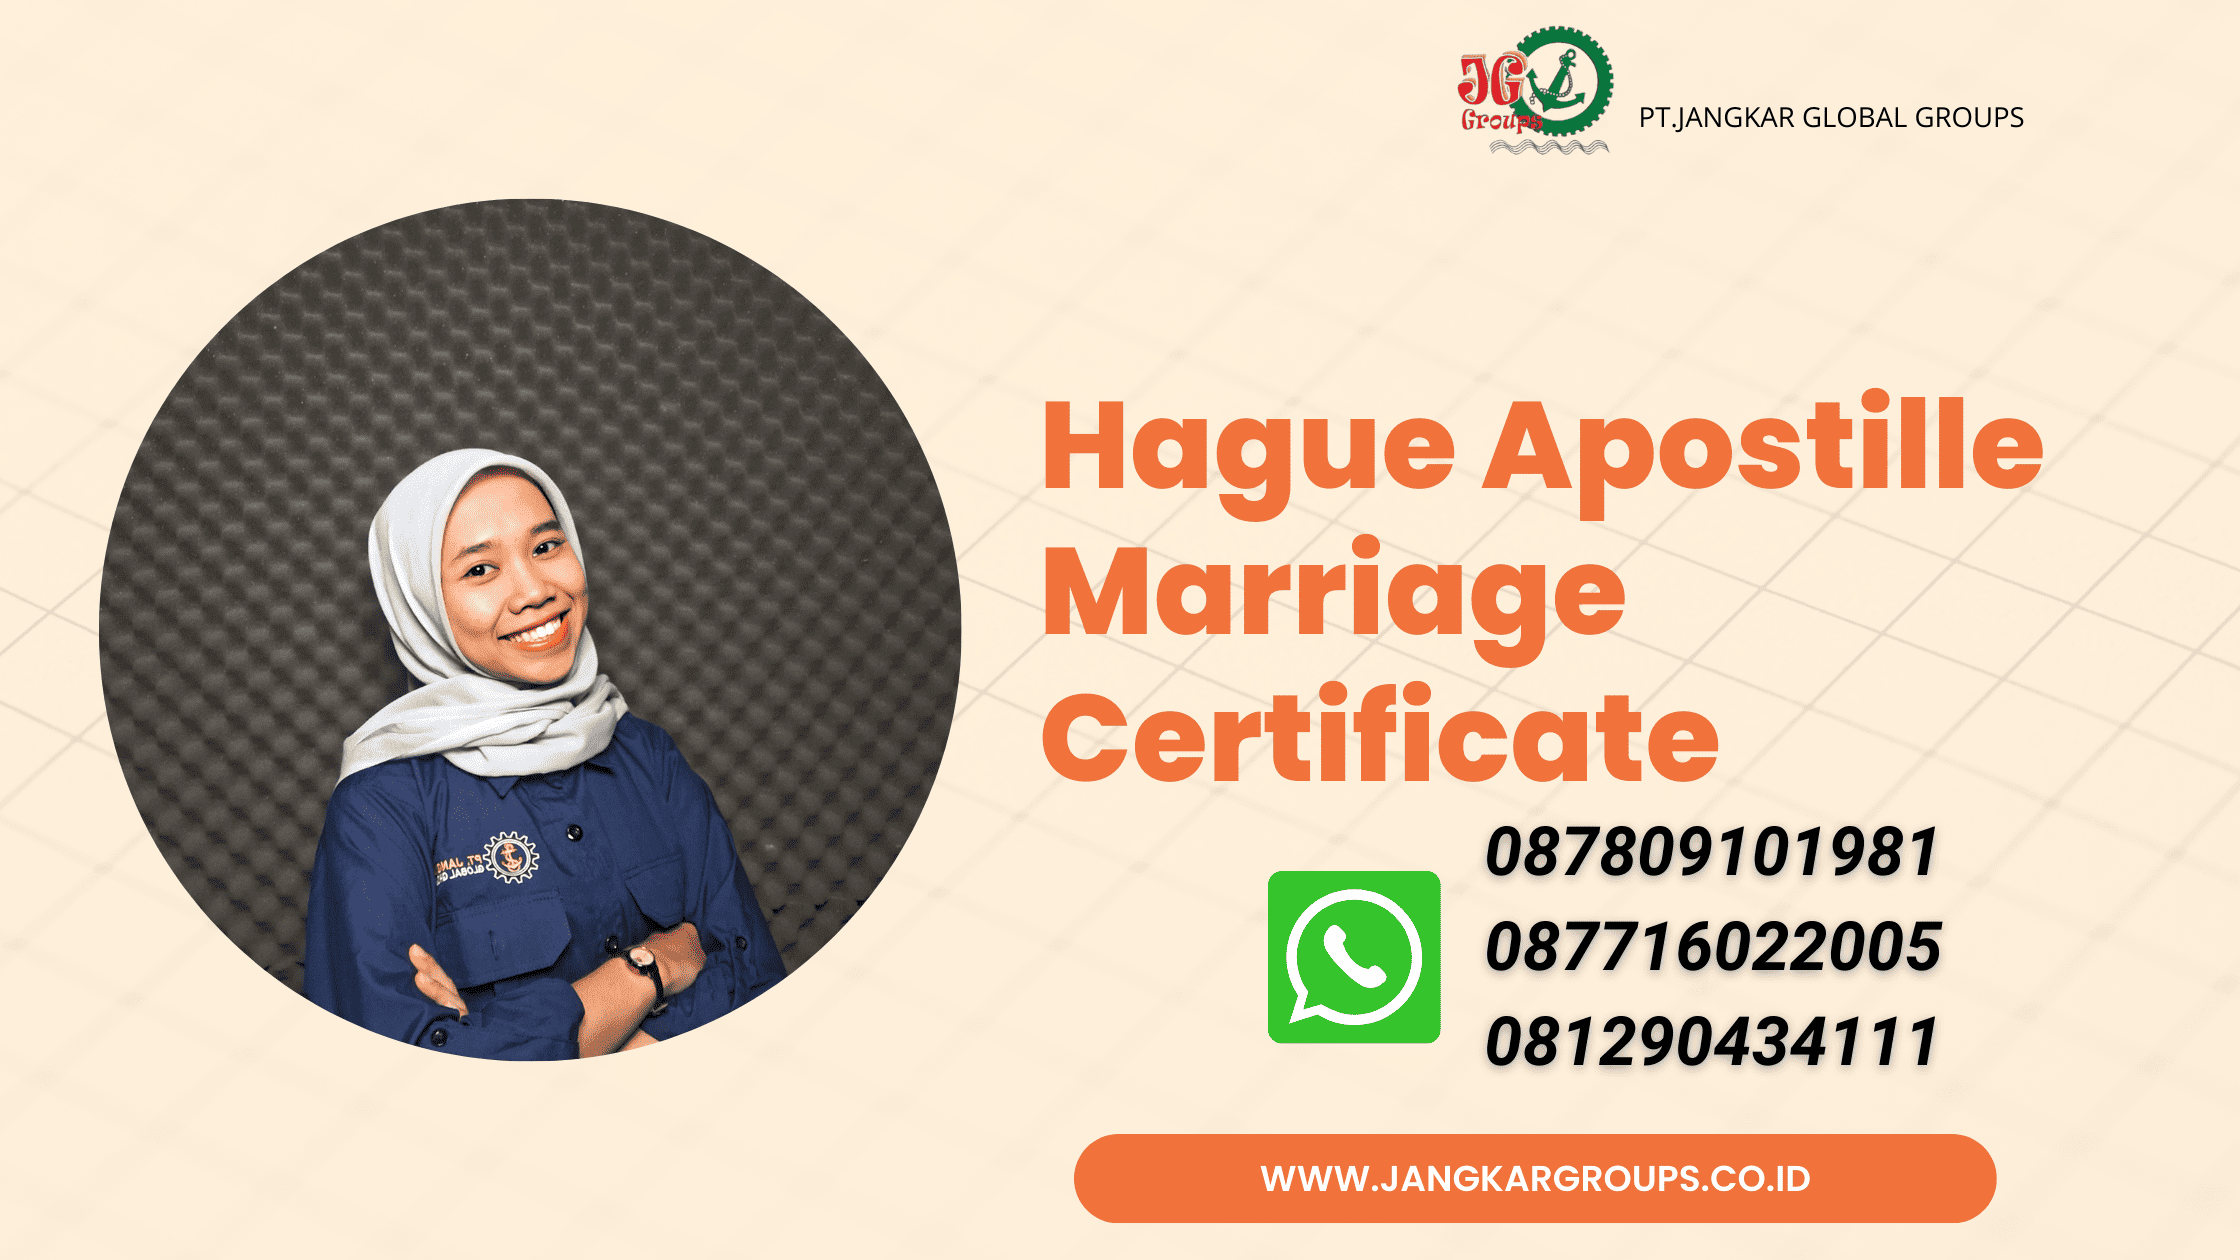 Hague Apostille Marriage Certificate